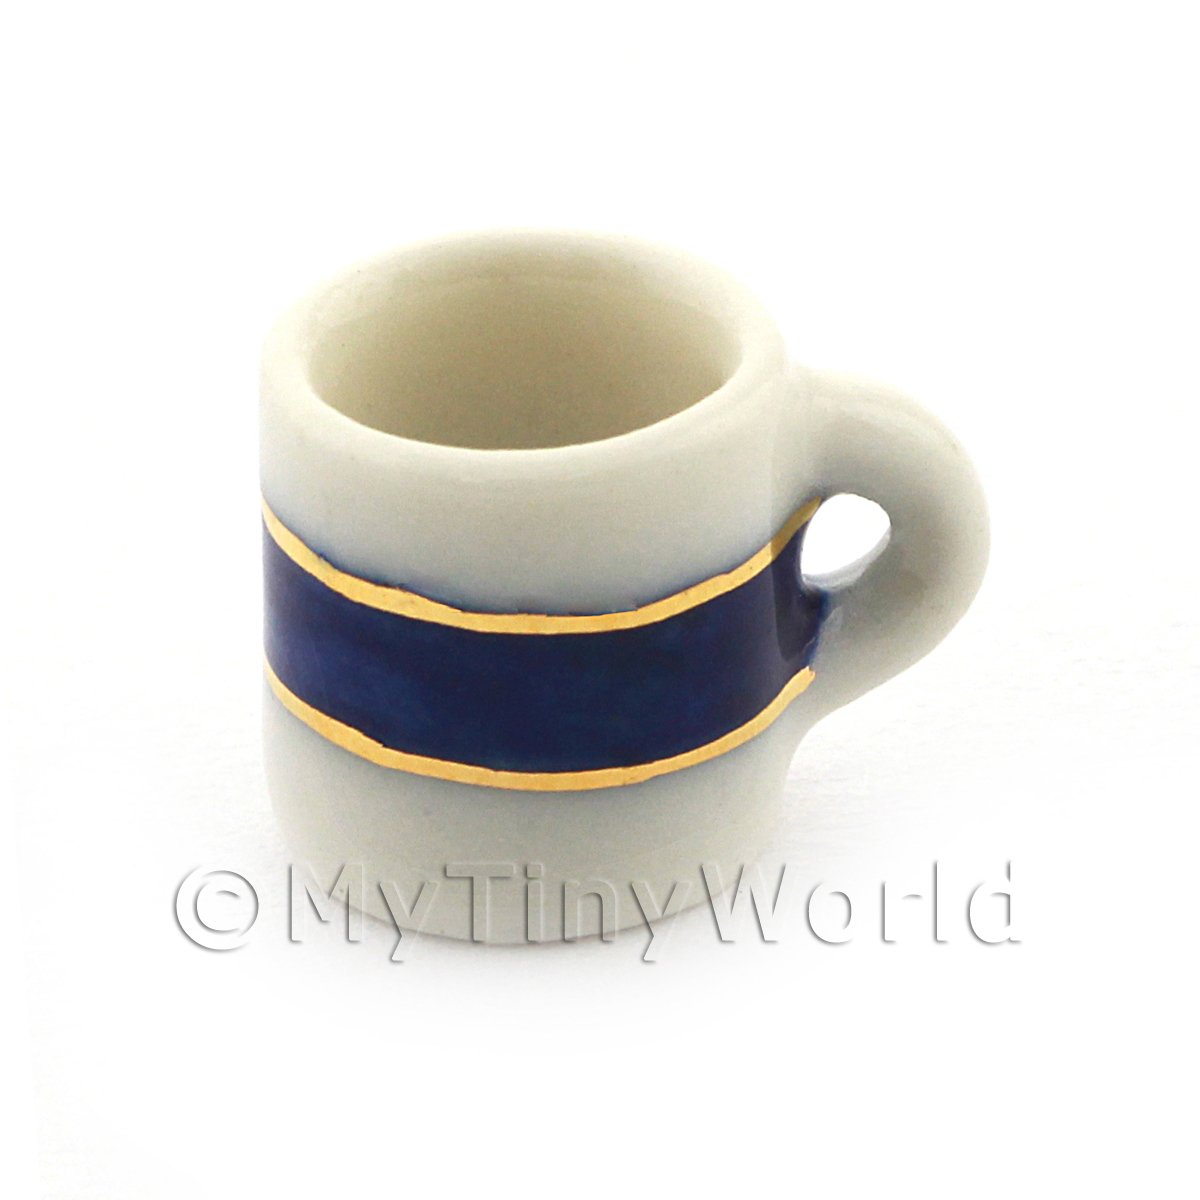 Dolls House Miniature Blue And Metallic Gold Coffee Mug 